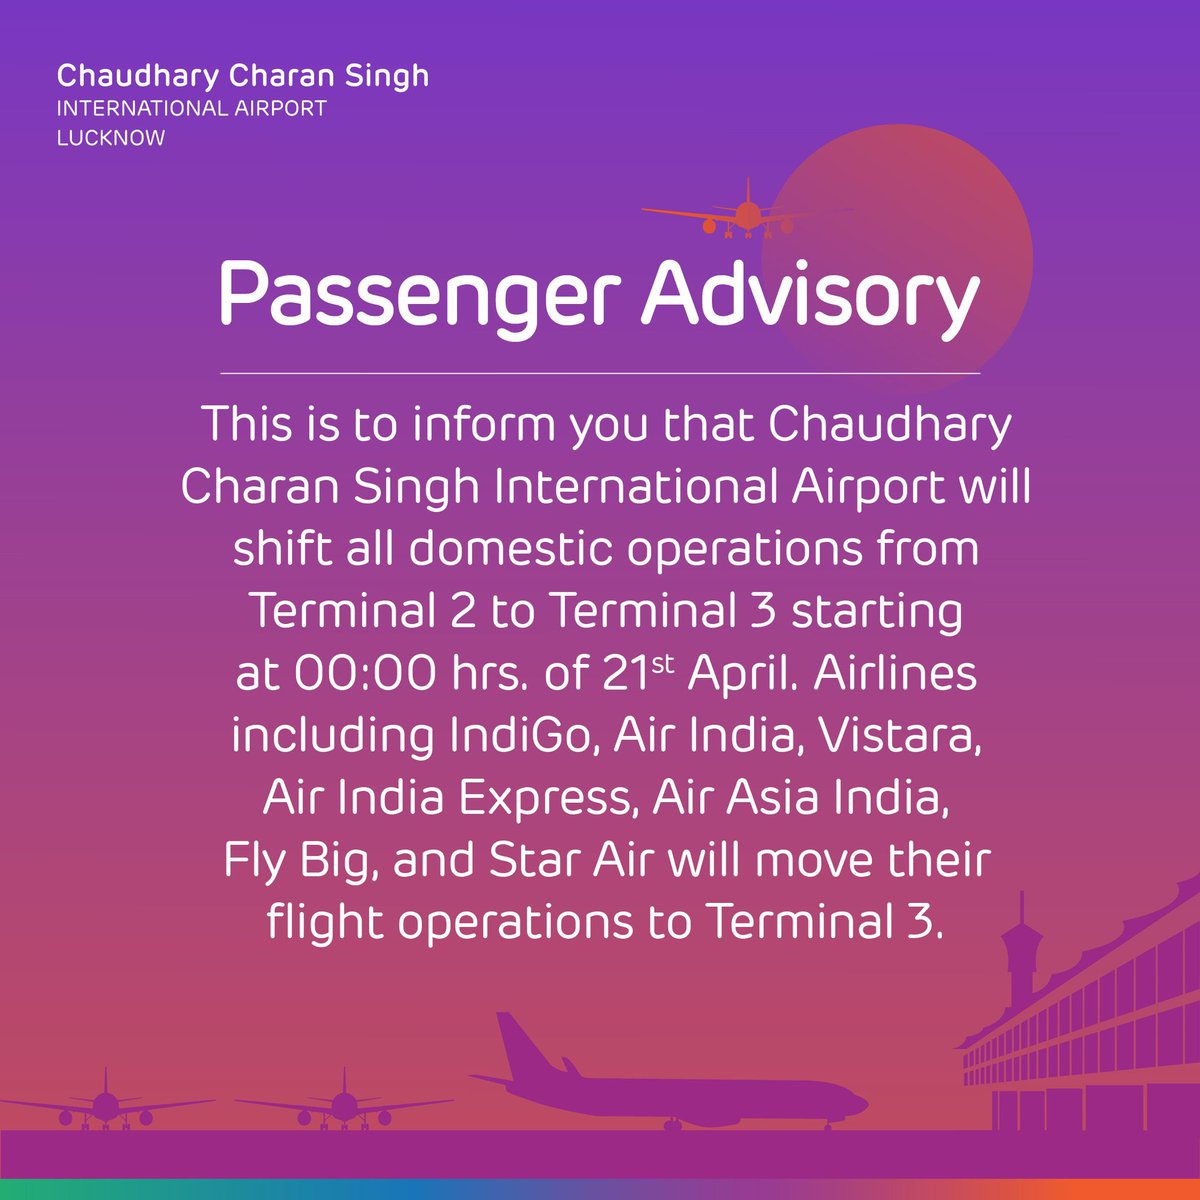 Starting from 00:00 hrs. of 21st April, #LucknowAirport will shift all domestic operations from Terminal 2 to Terminal 3
#Lucknow #UttarPradesh #Terminal3
#Airlines #Indigo #Akasaair #AirIndia, #AirIndiaExpress, #Vistara, #FlyBig, #AirAsia #StarAir
@lkoairport